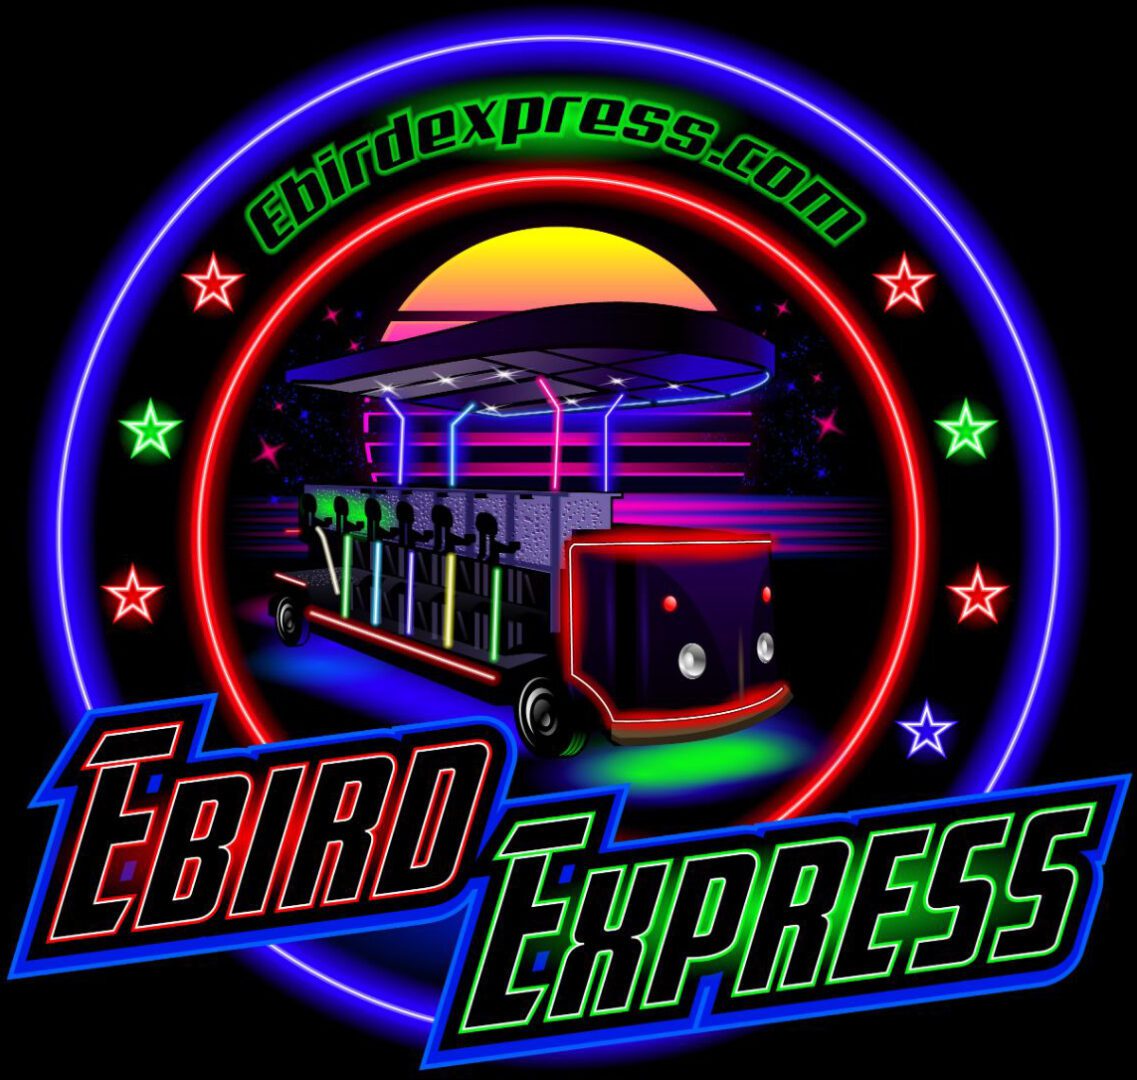 EBIRD EXPRESS LOGO - PDF